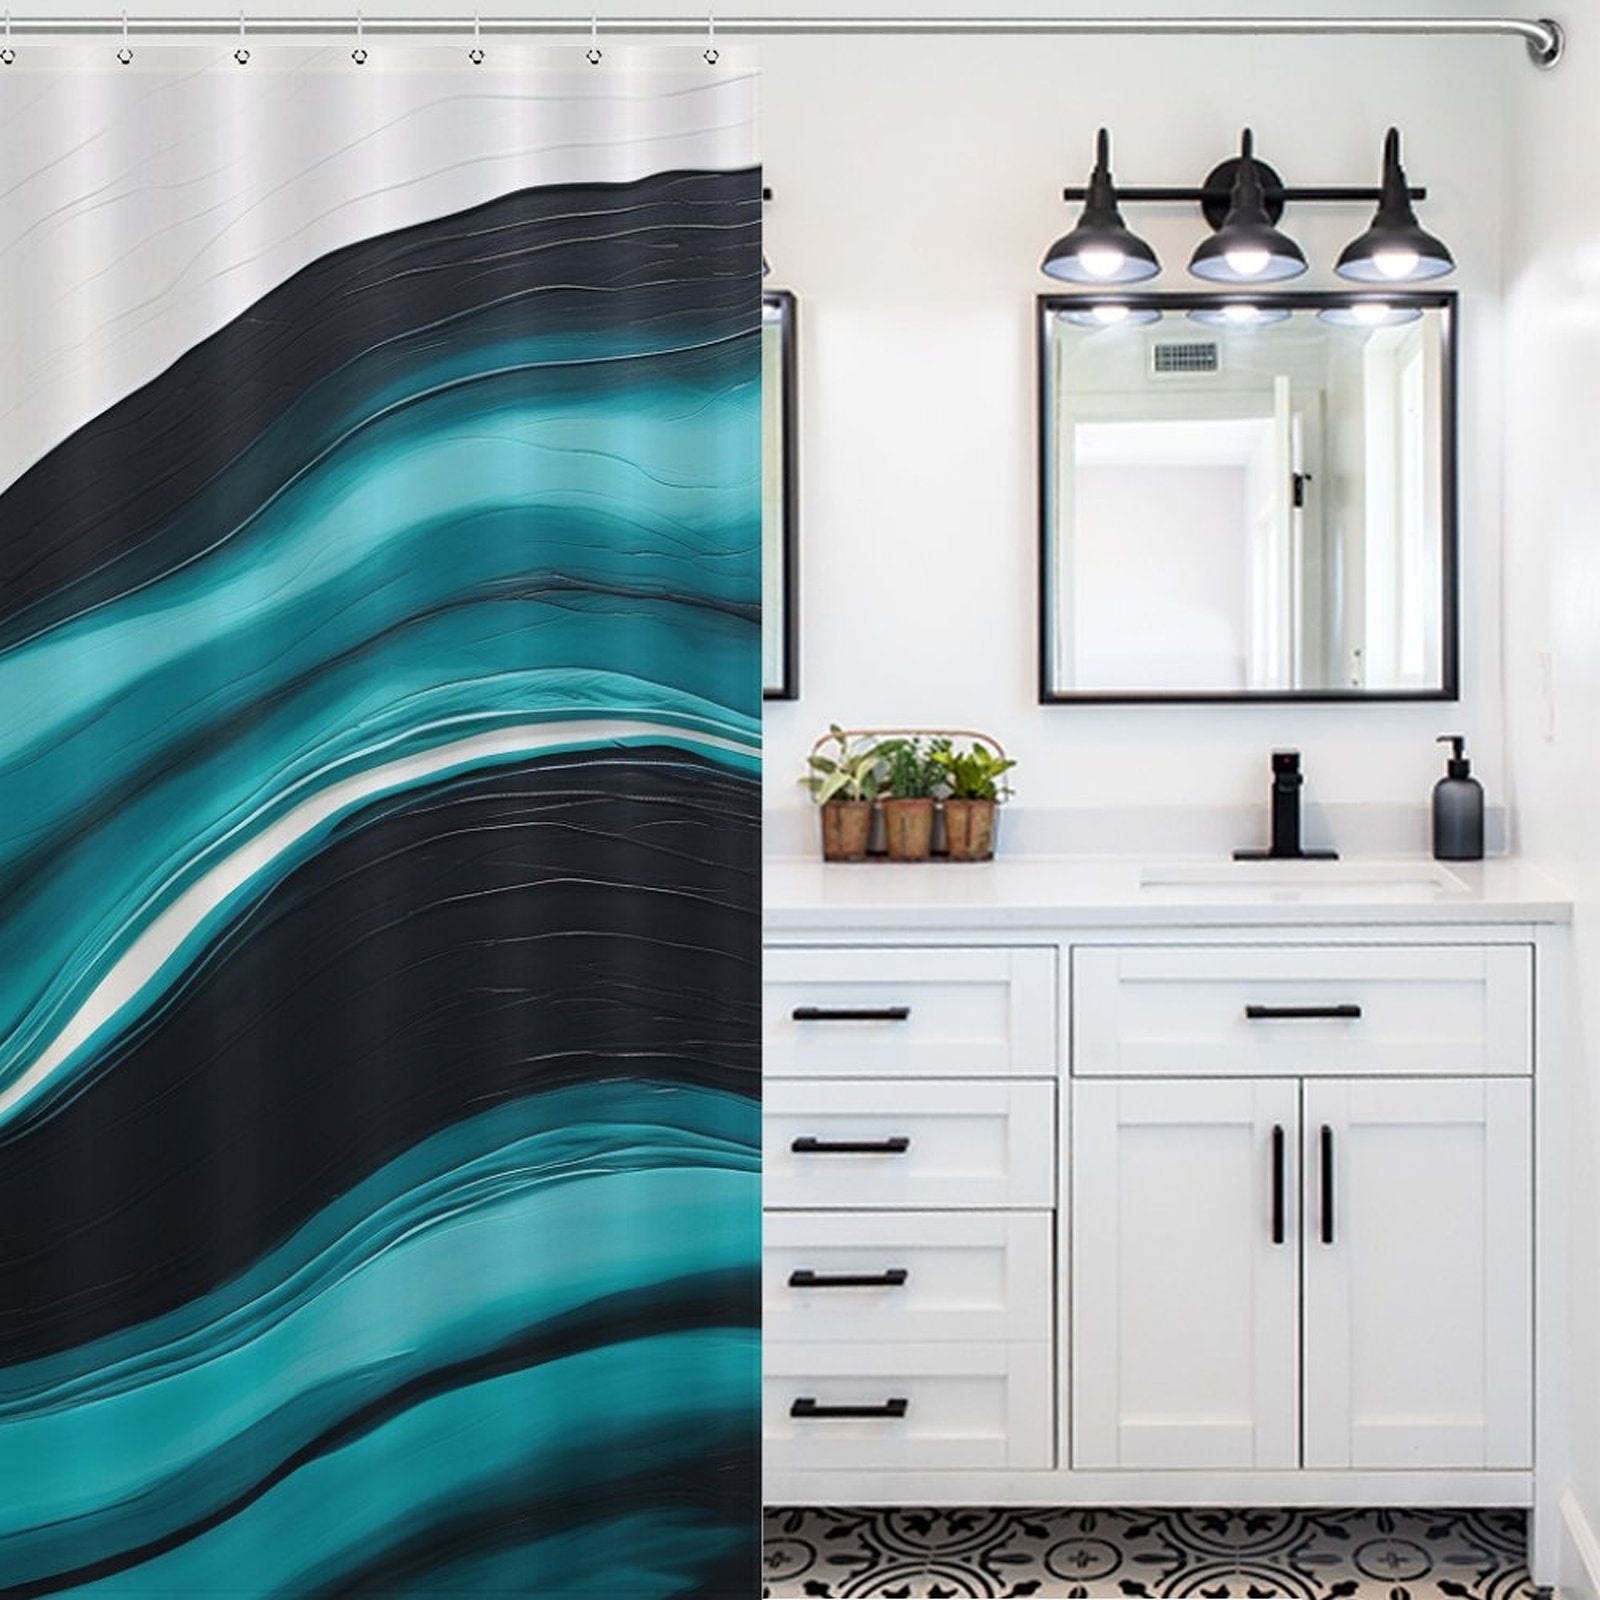 Stylish Black White and Turquoise Shower Curtain